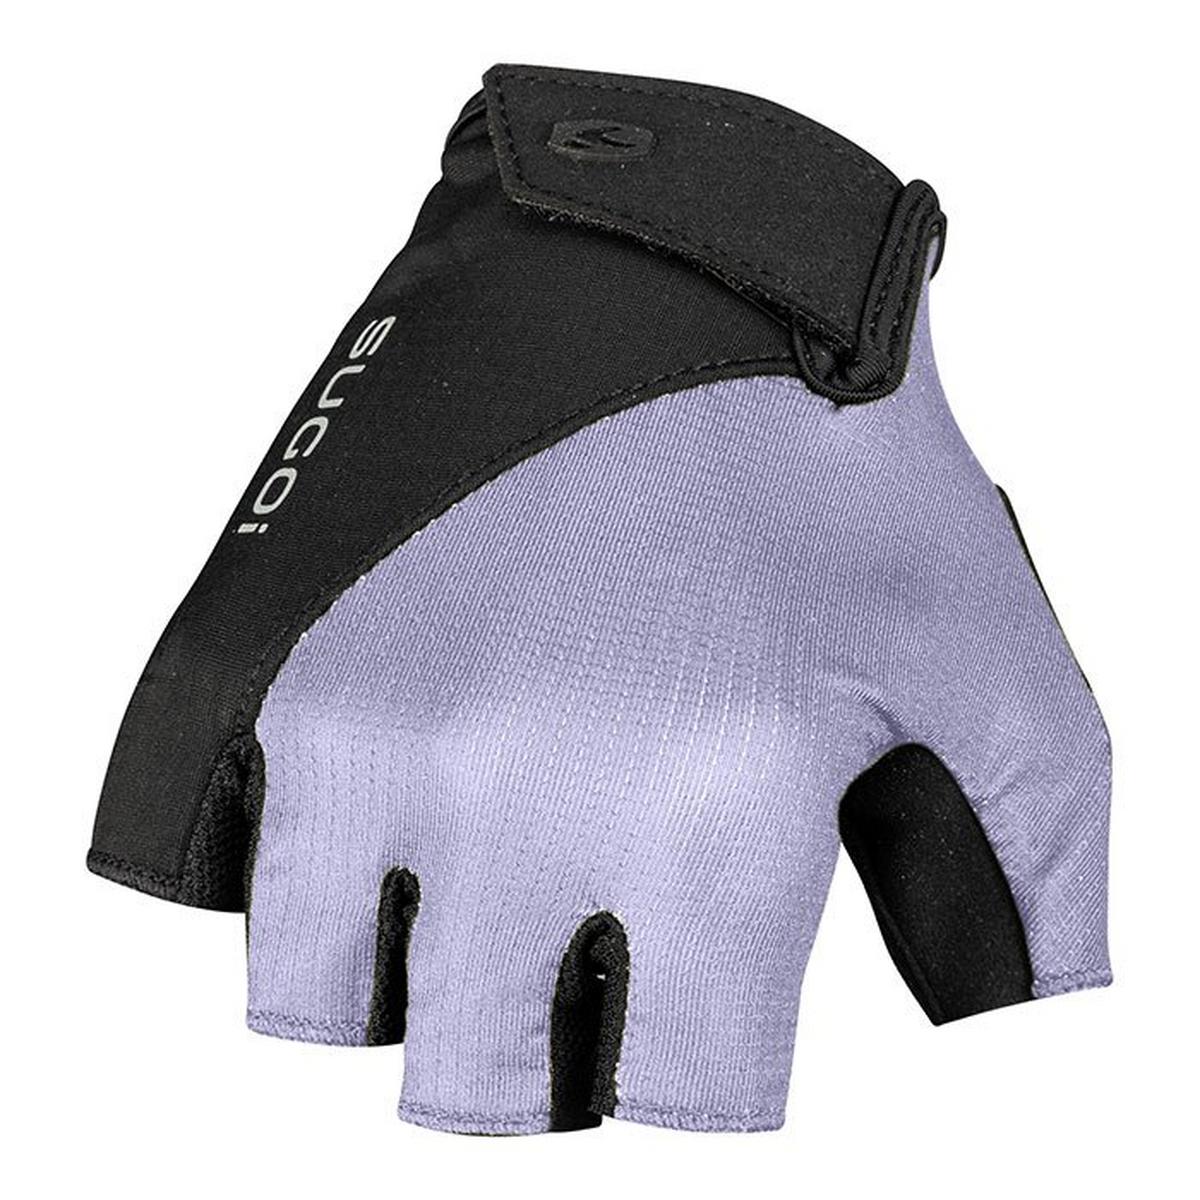 Women's Performance Glove